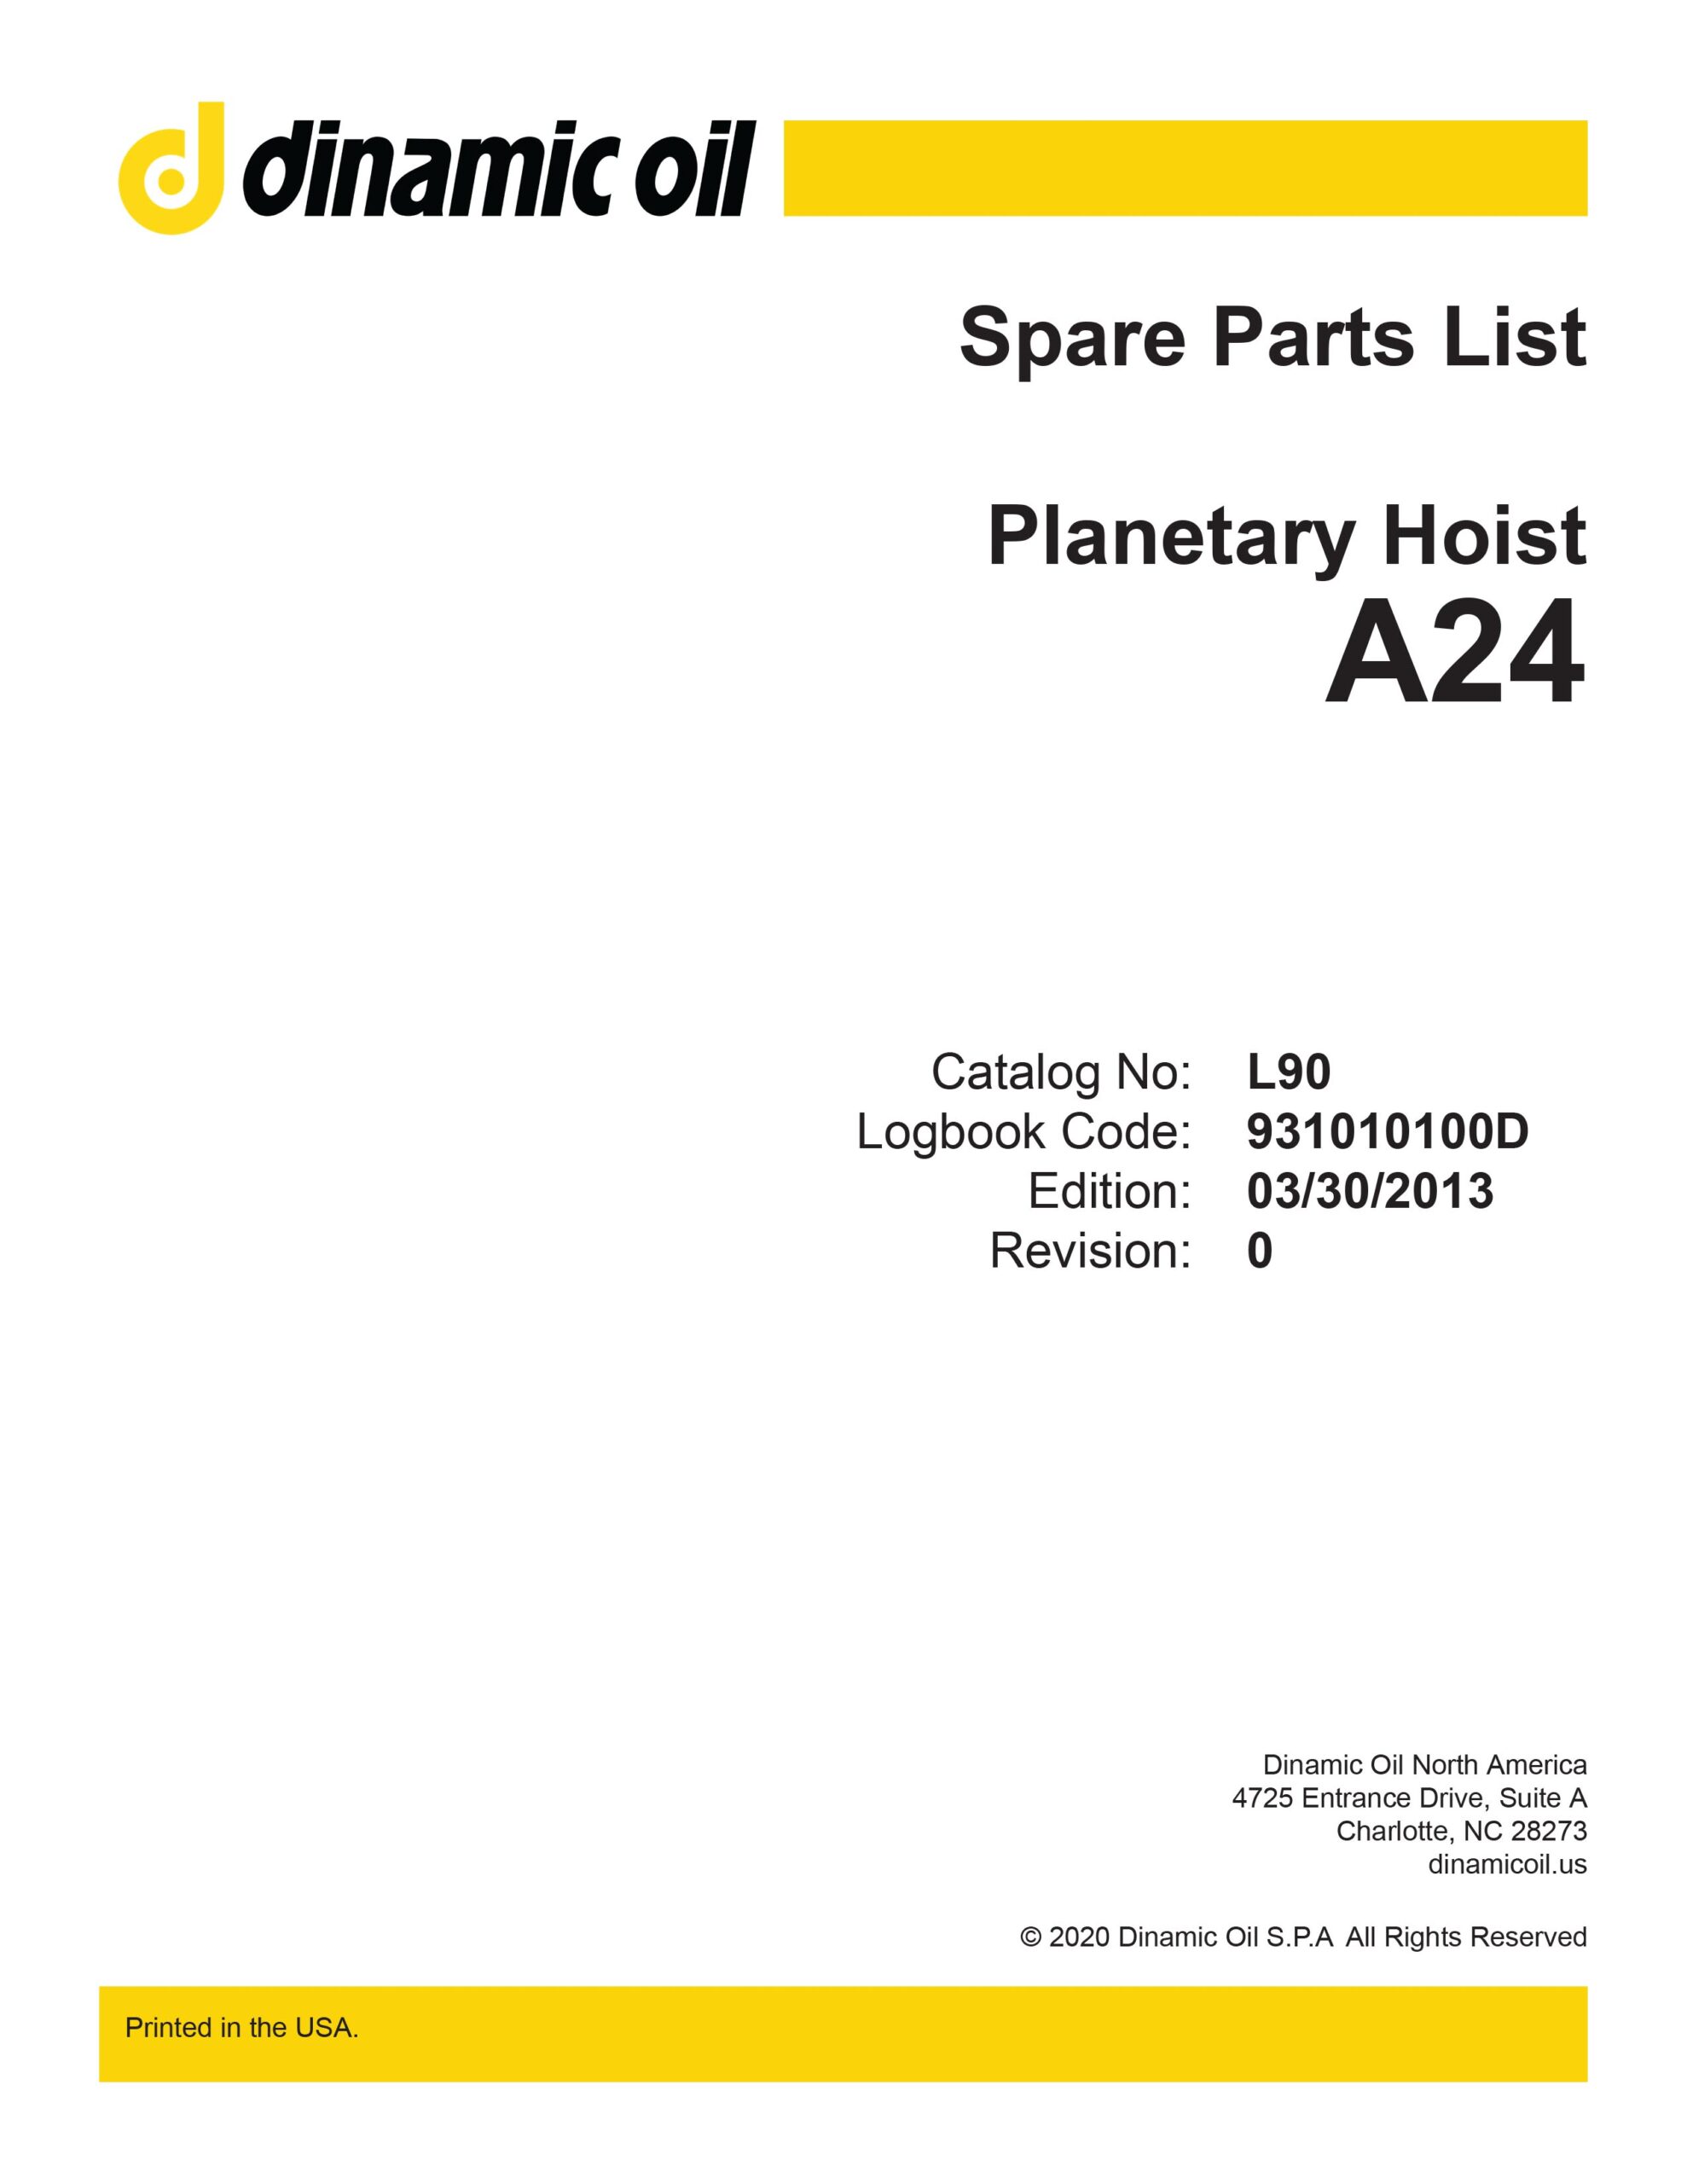 Planetary Hoist A24